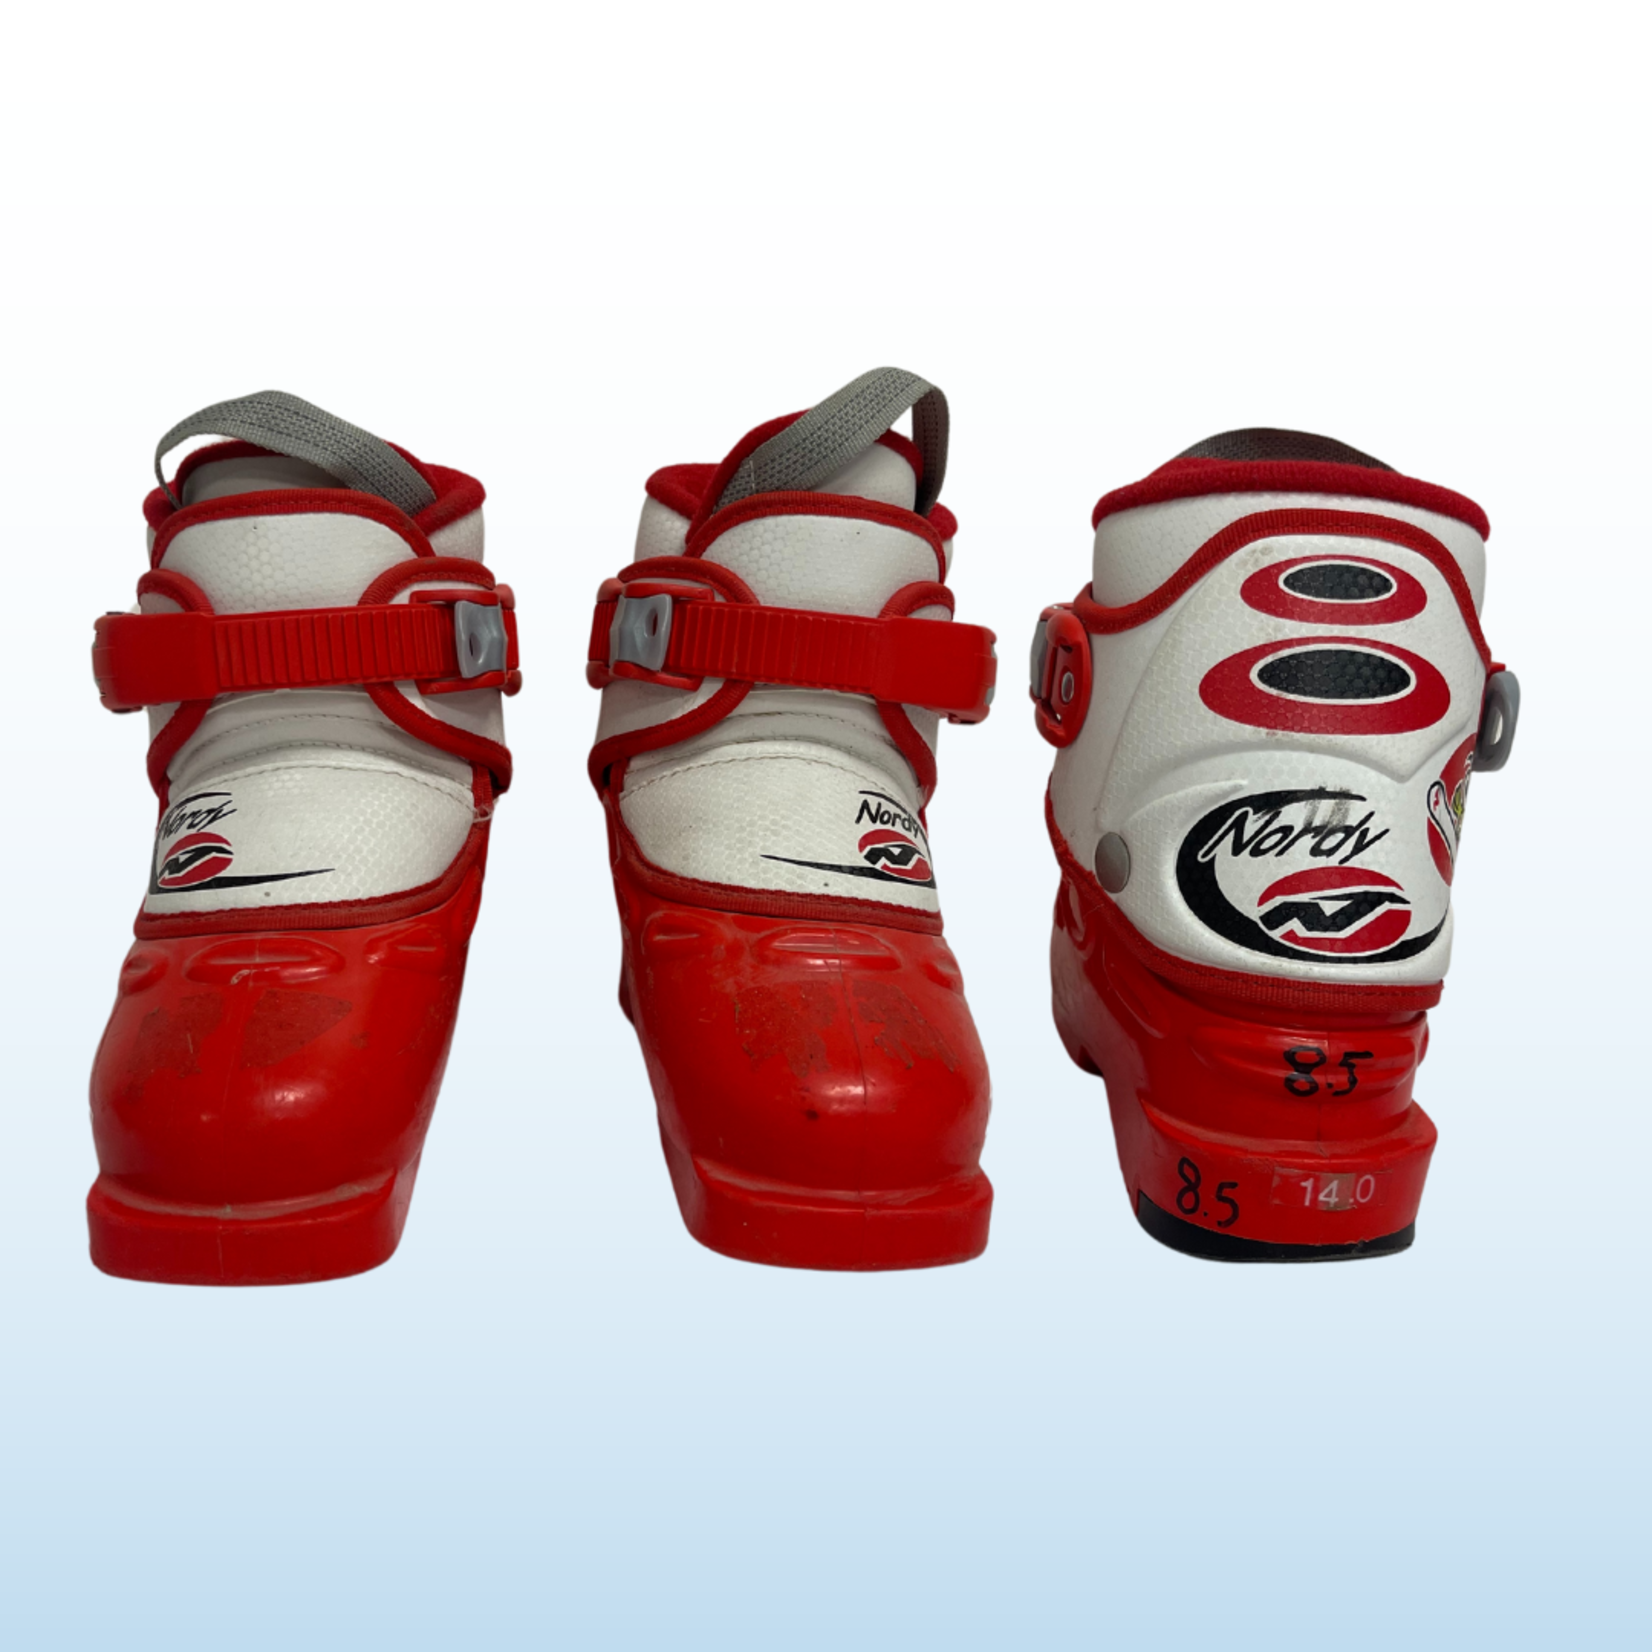 Nordica Nordica Nordy Jr. Ski Boots, Size 14